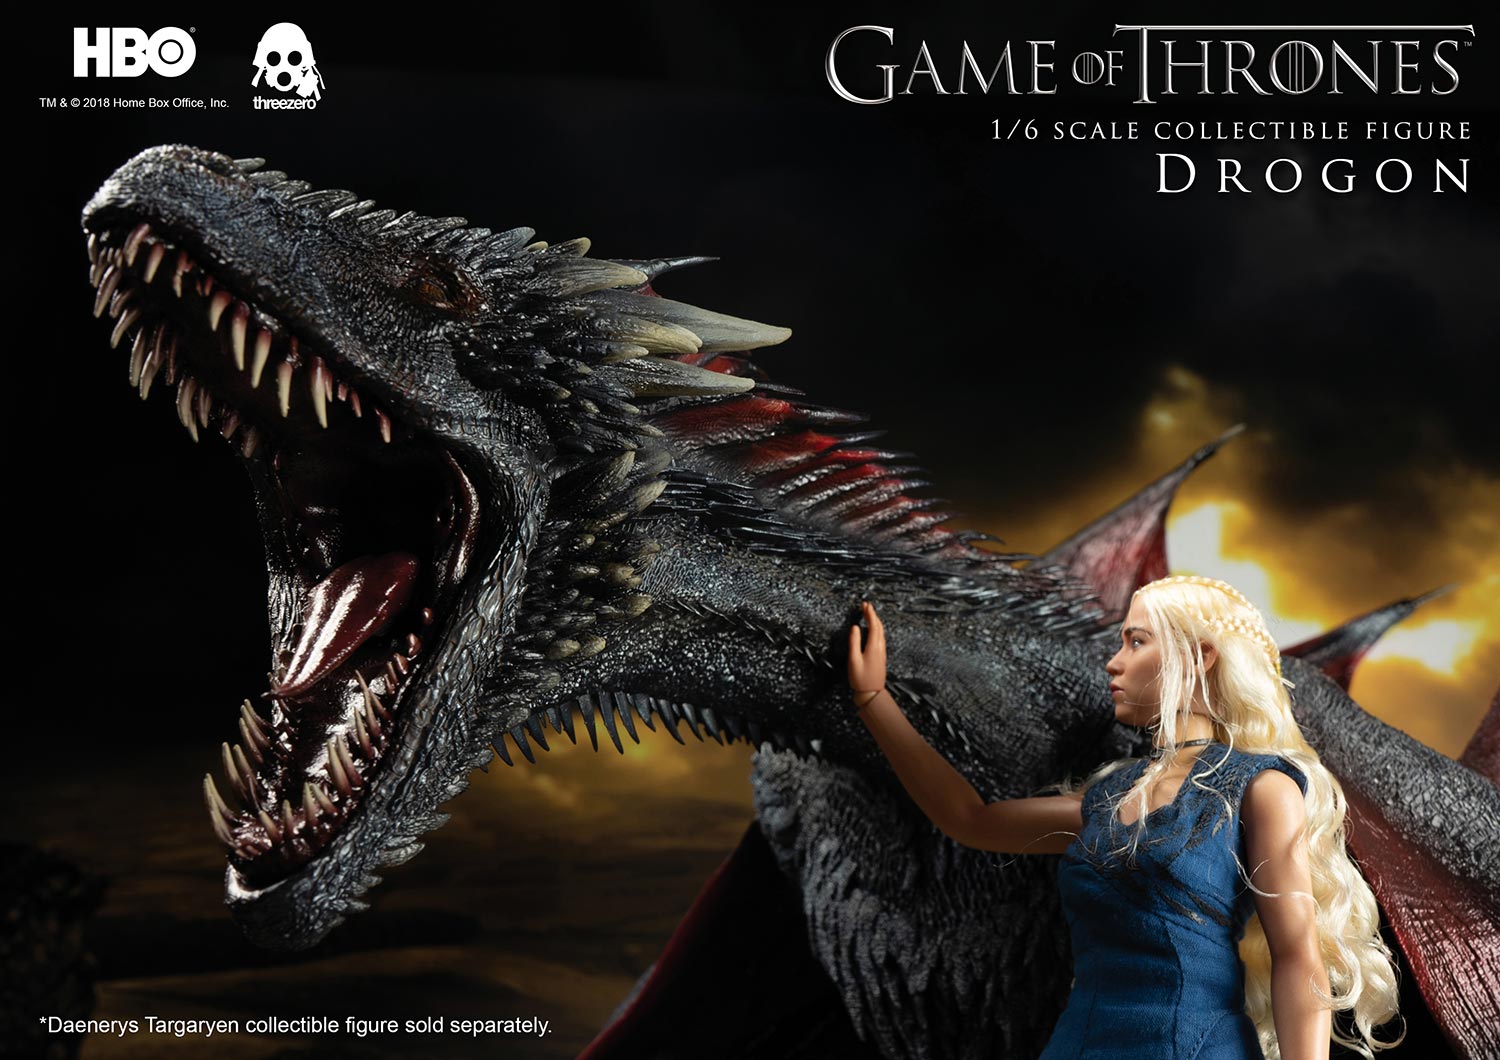 Game of Thrones Drogon Drache Drachen Figur Dragon original HBO Lizenzprodukt 